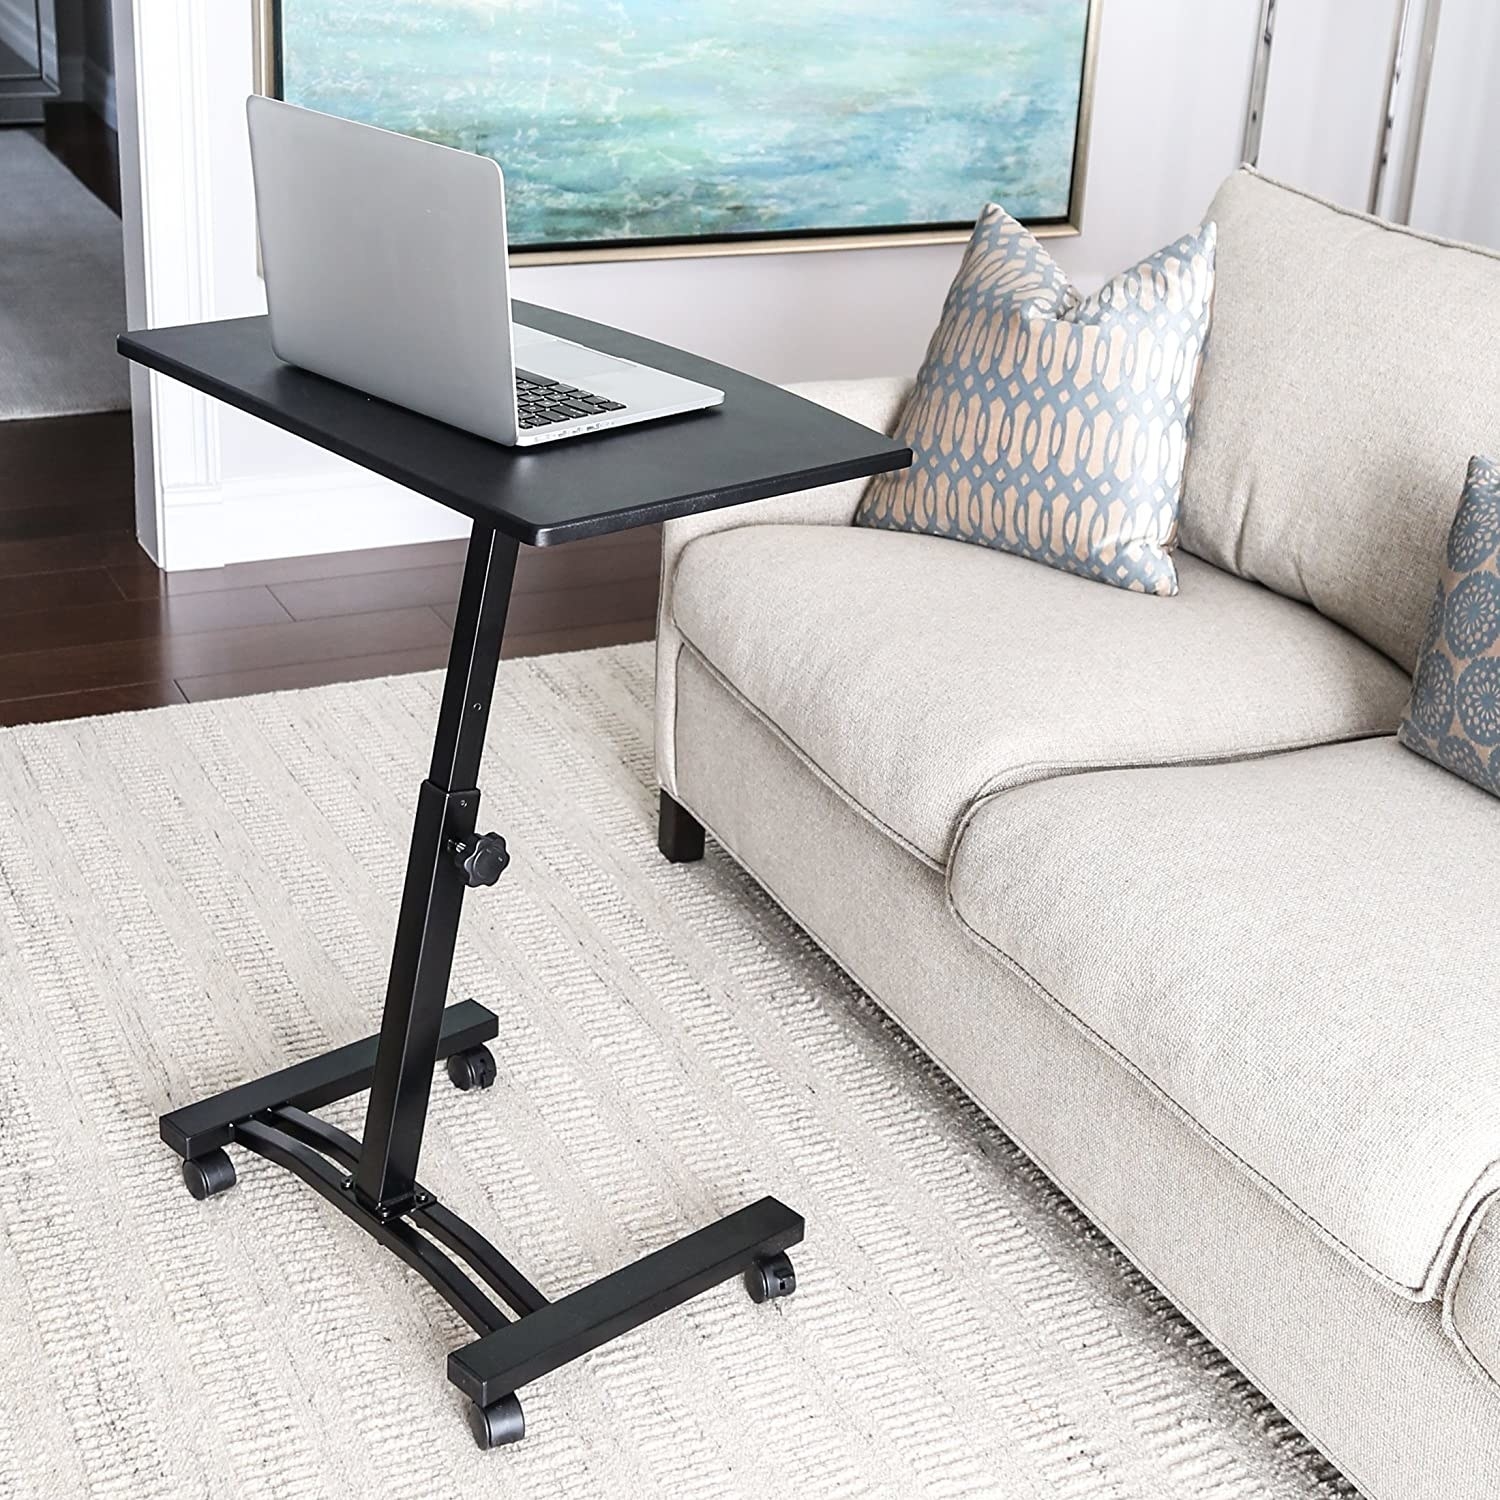 The compact wheeled black adjustable desk  